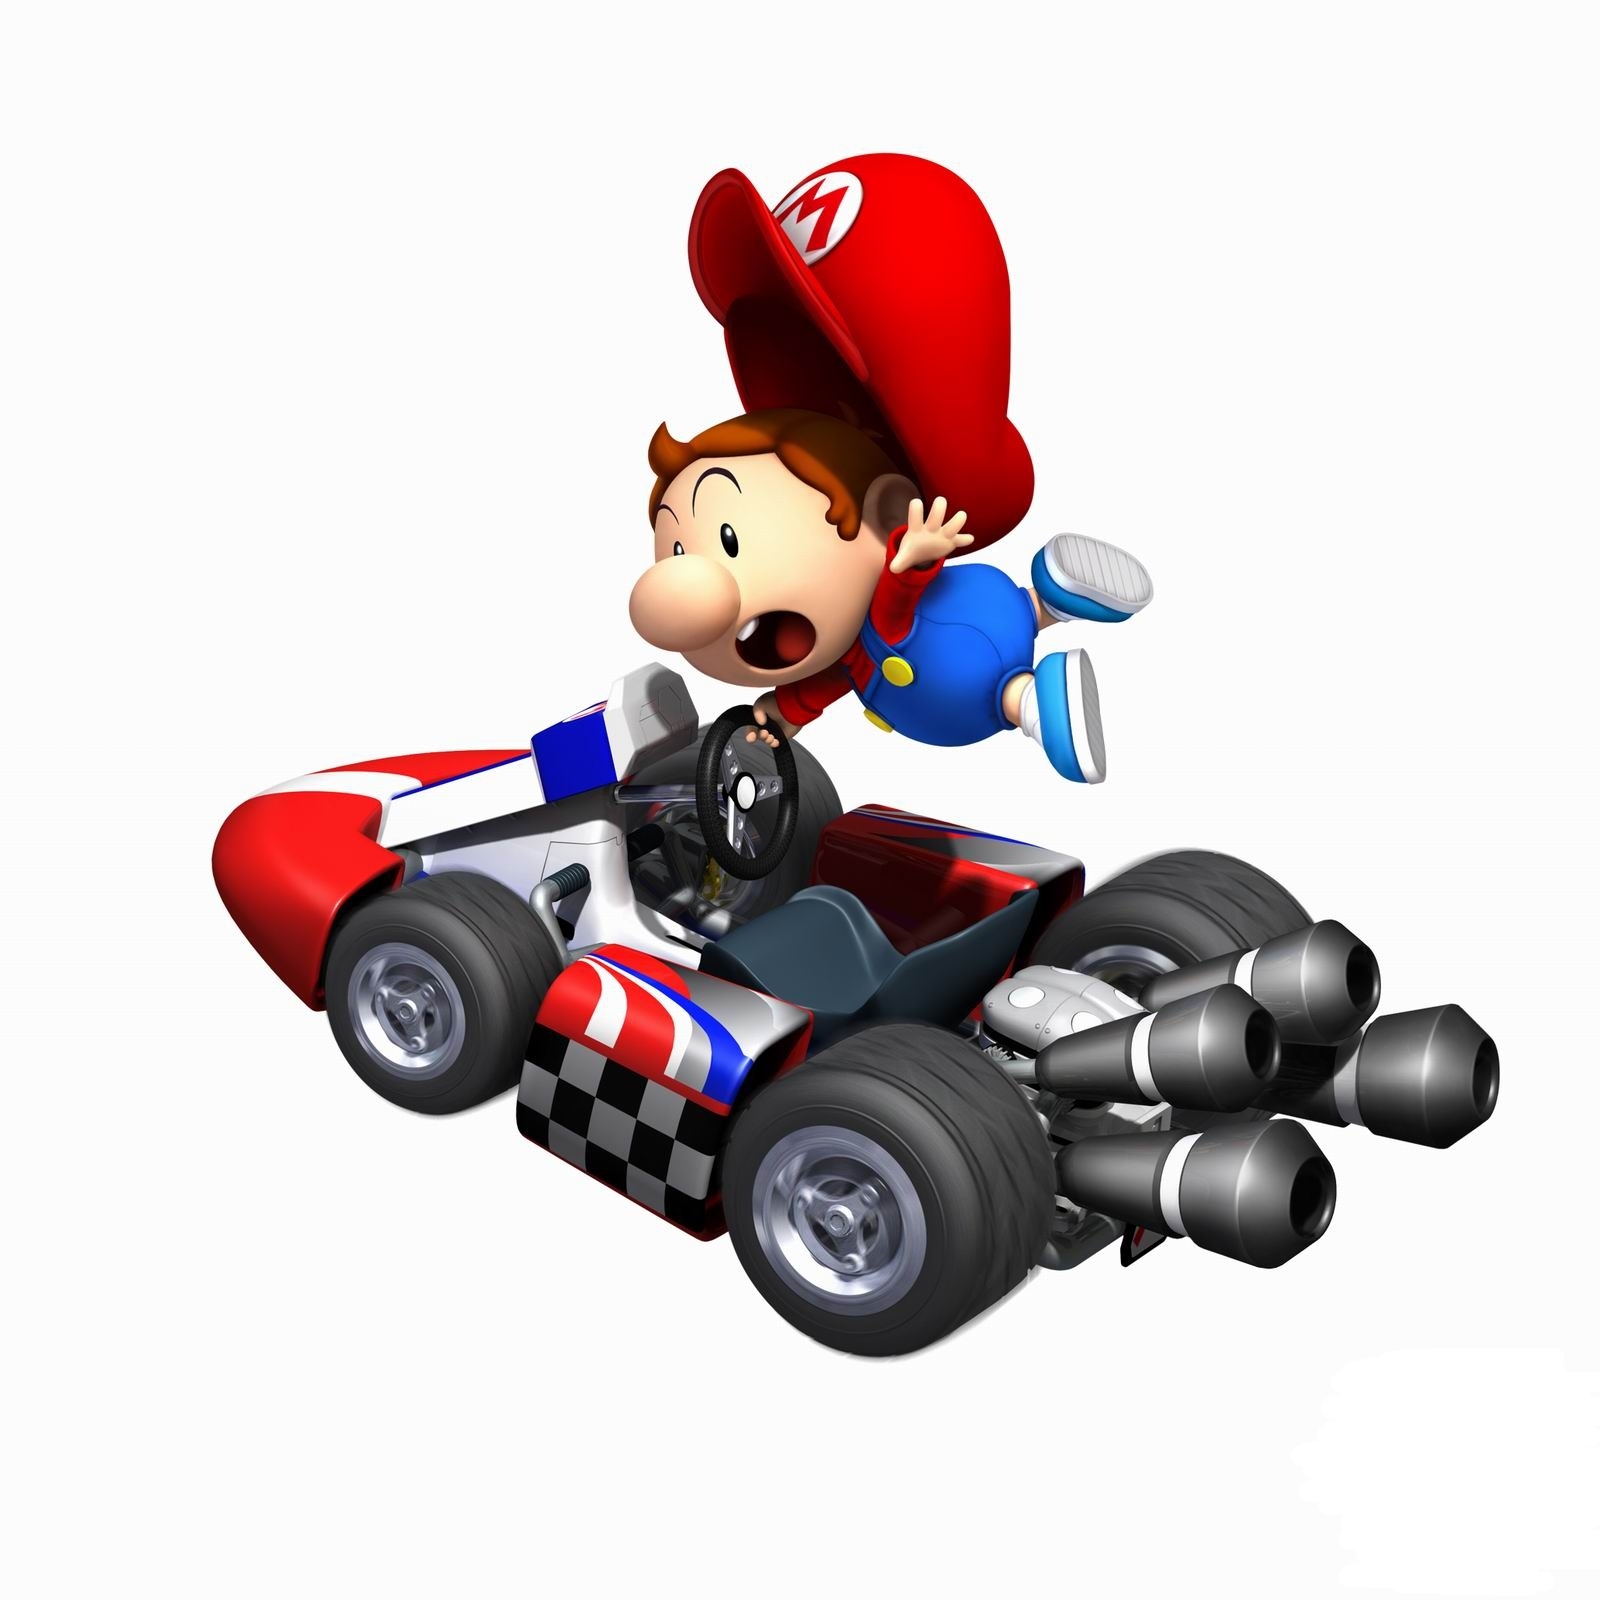 Standard Kart S Mario Kart Racing Wiki Fandom Powered By Wikia 3825